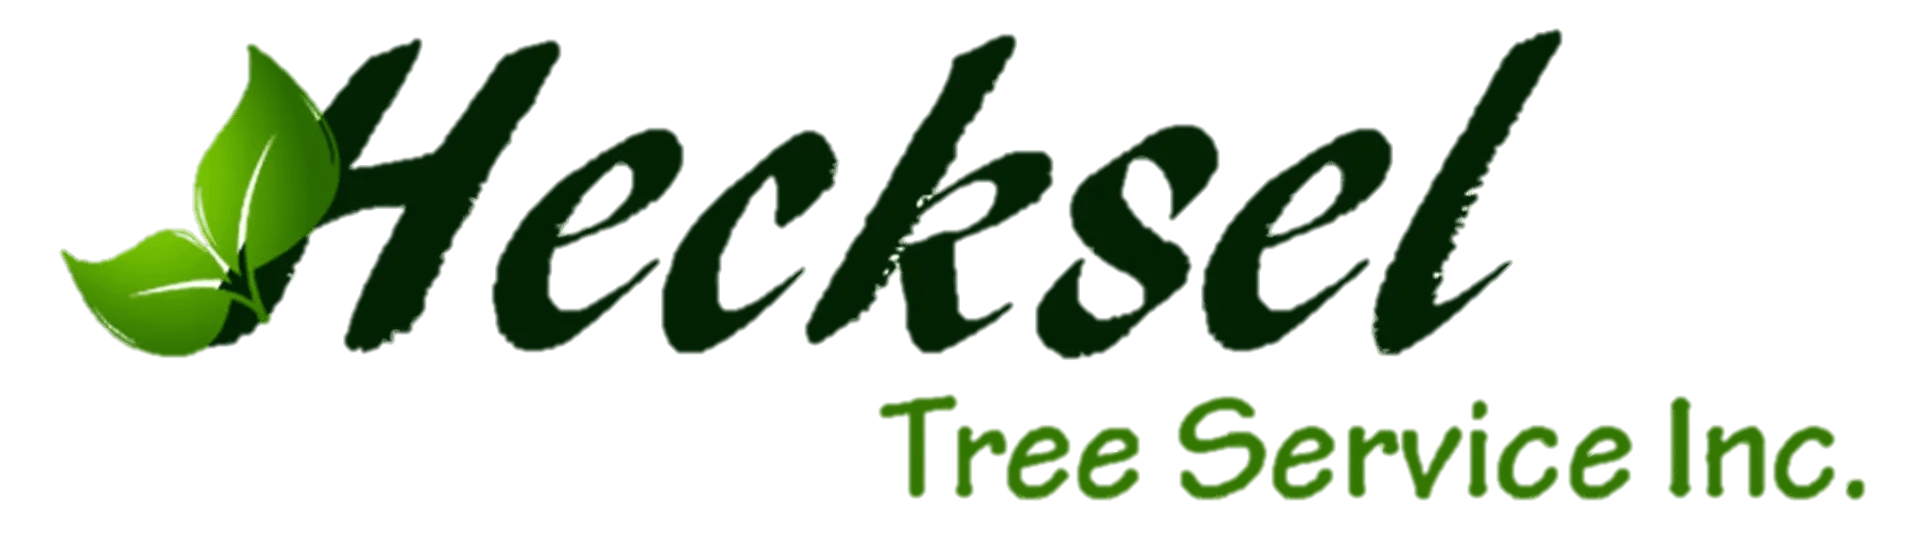 Hecksel Tree Removal